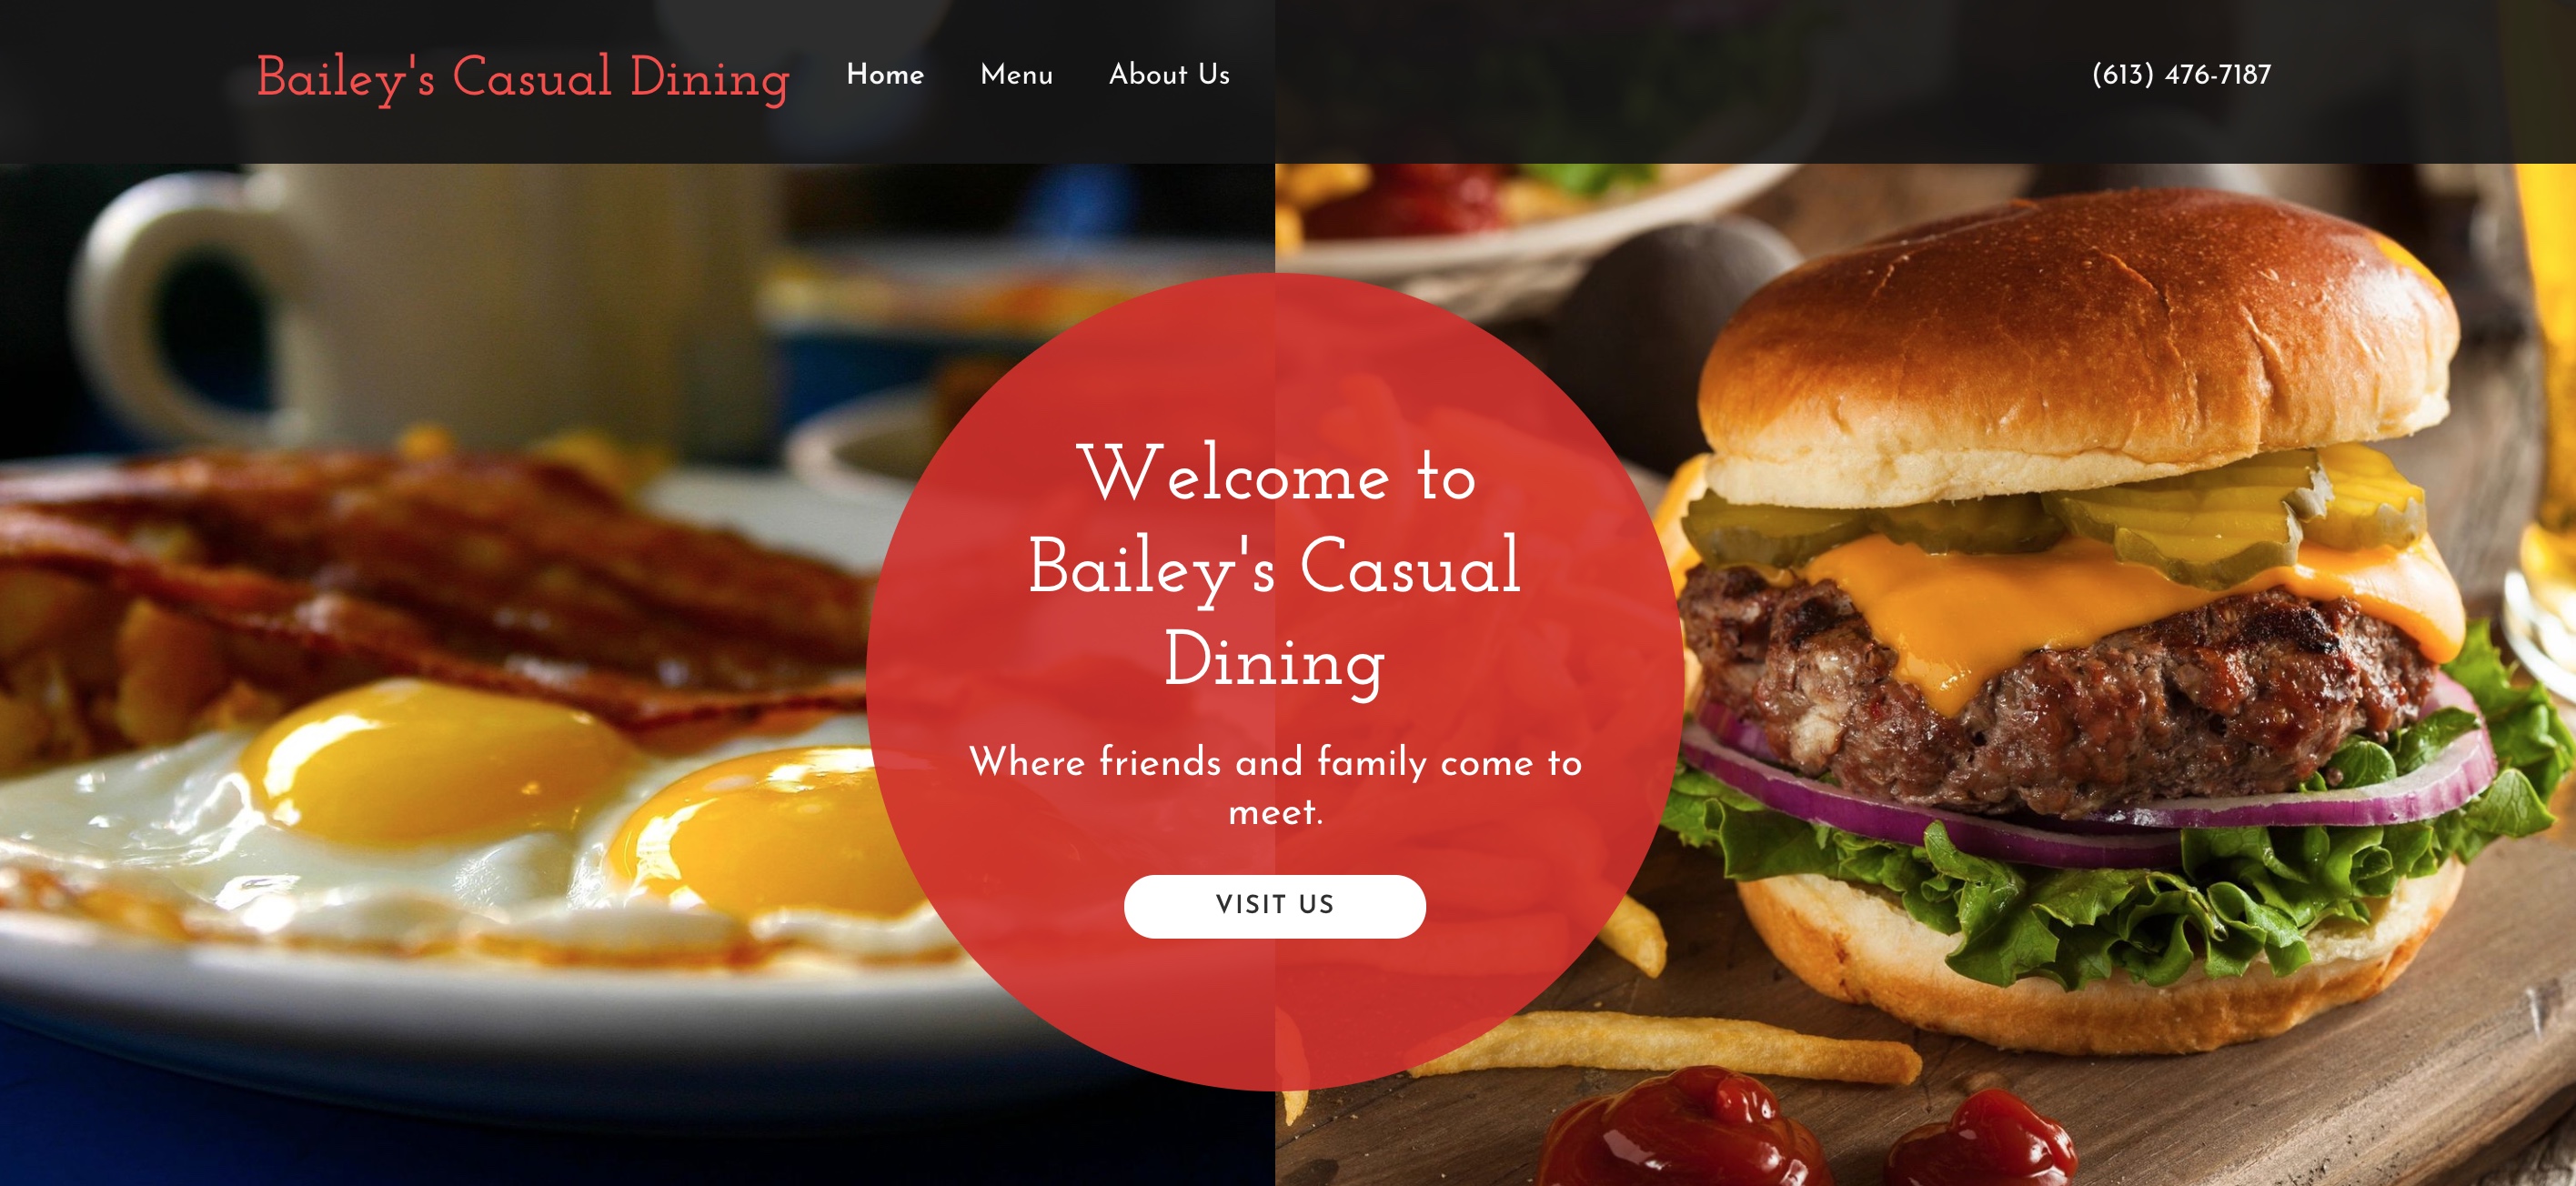 Baileys Casual Dining